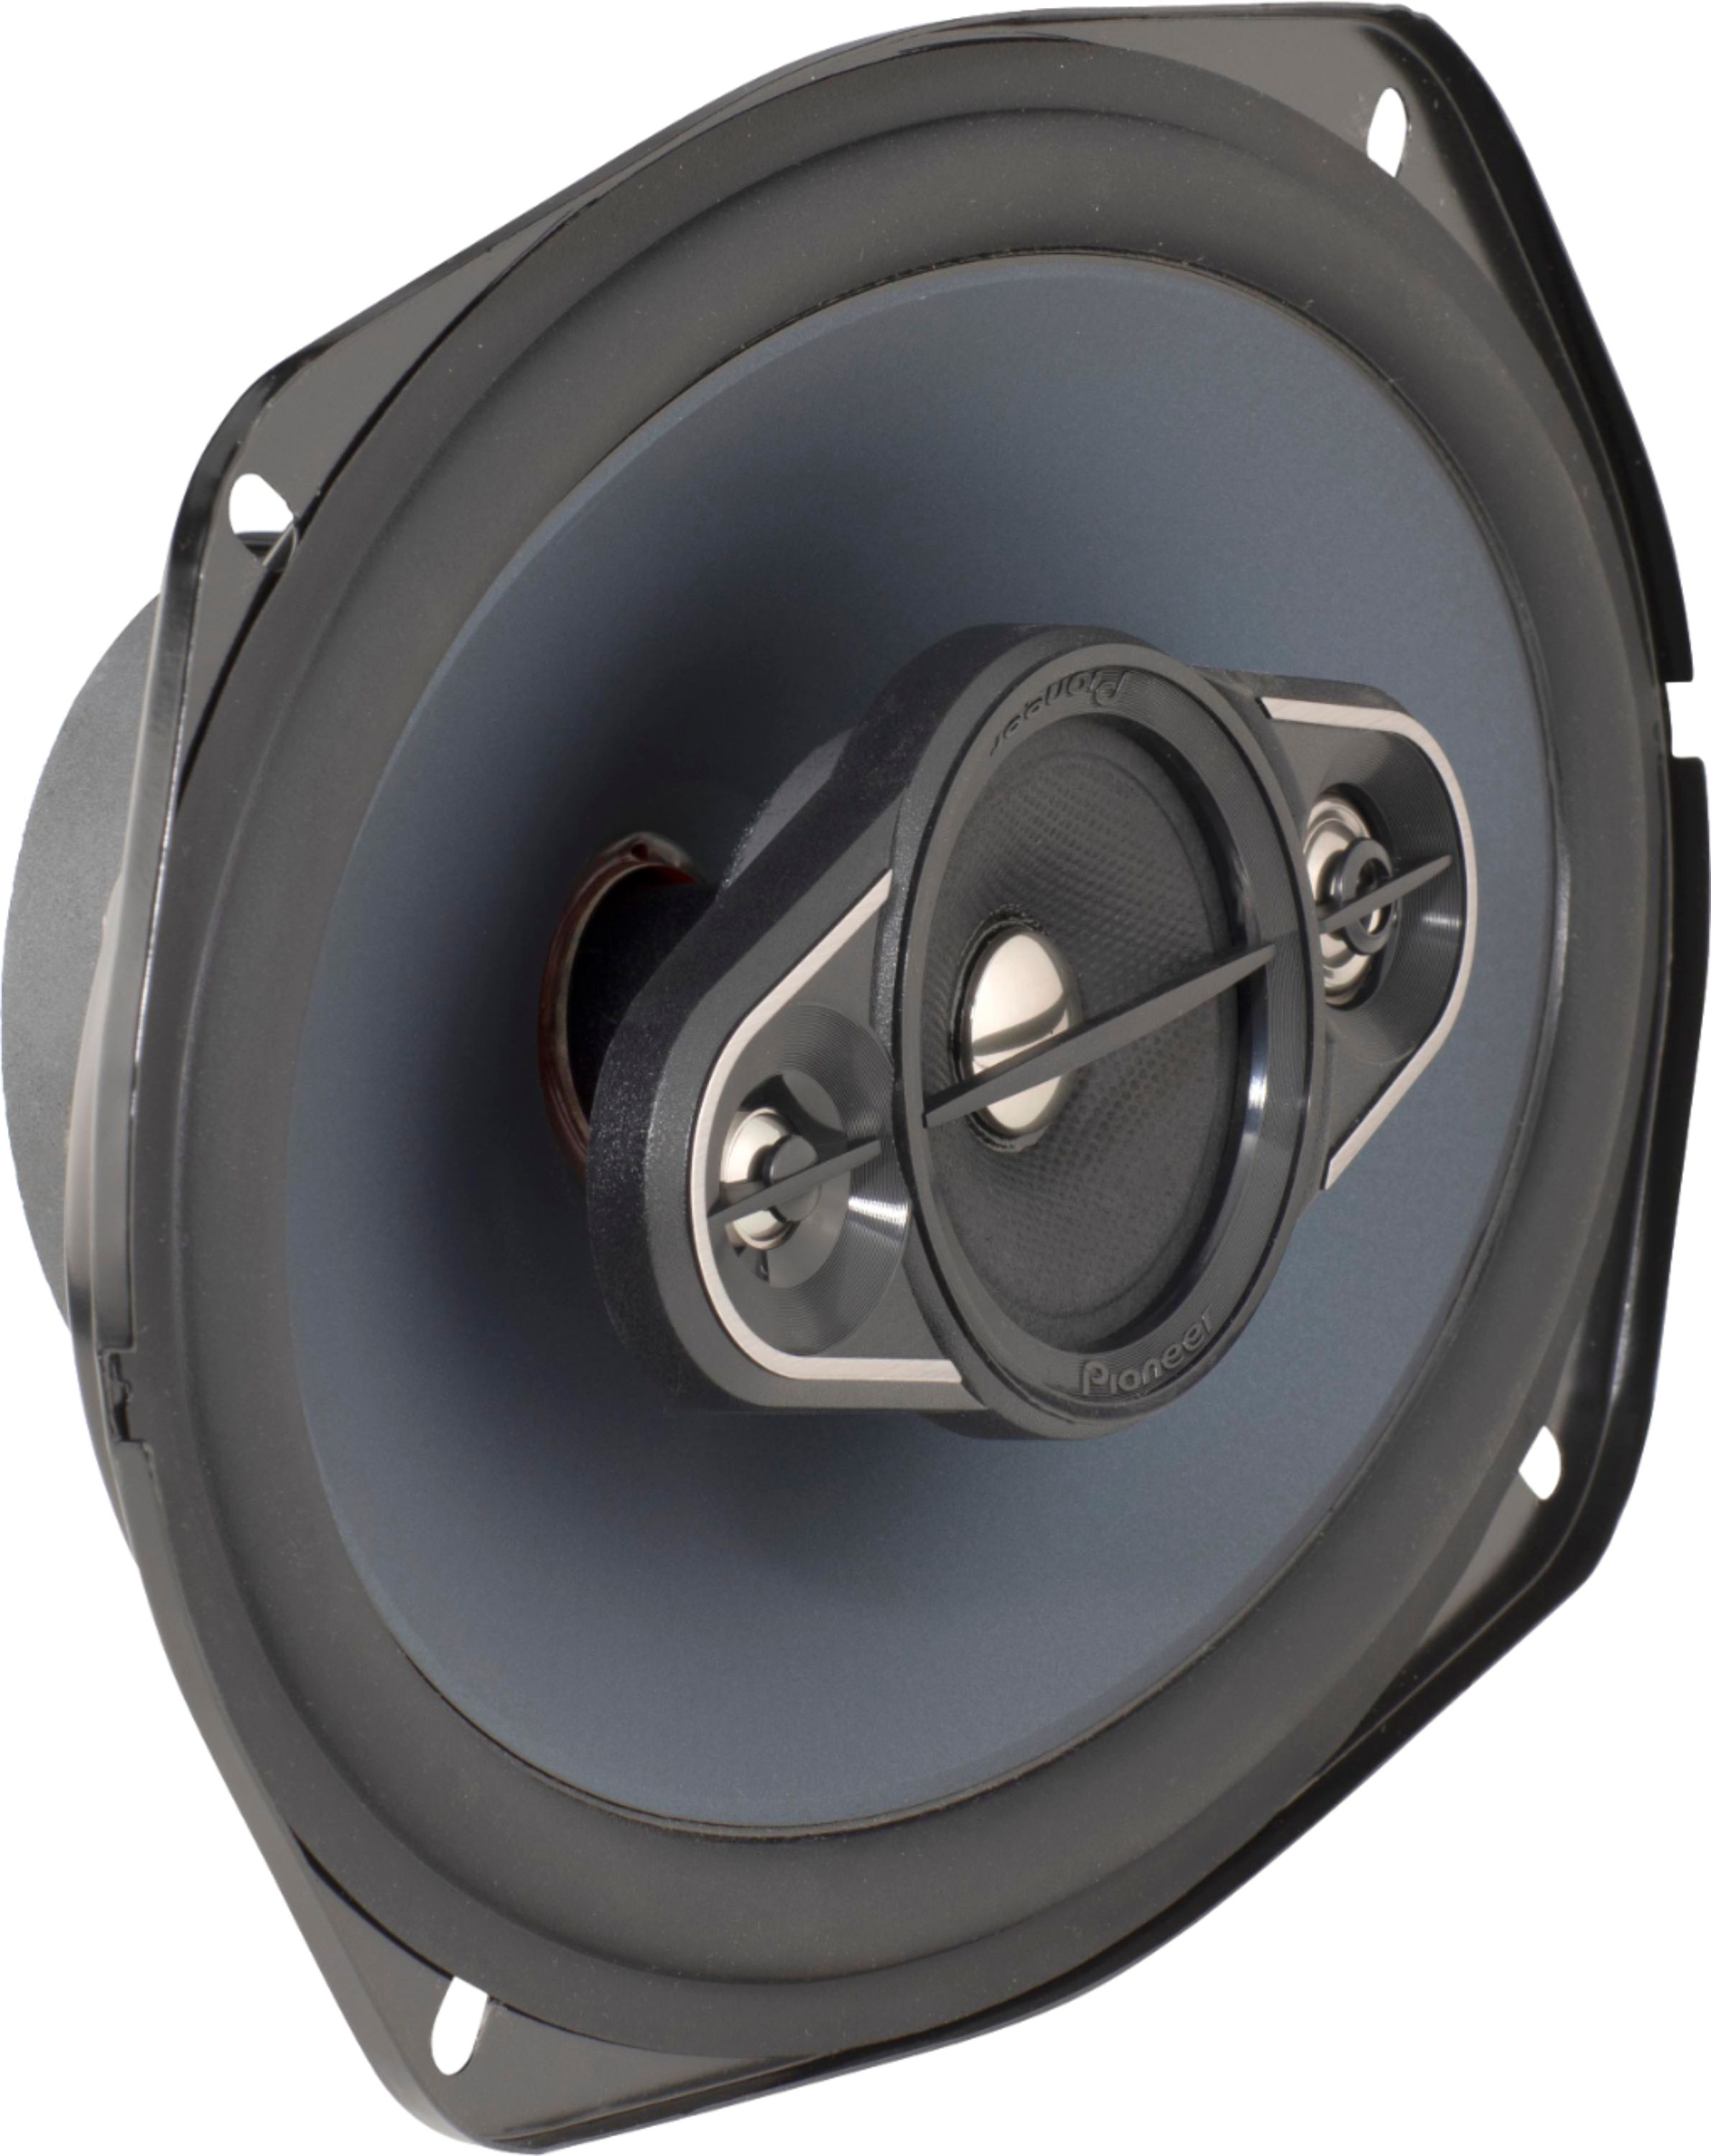 Angle View: KICKER - CS Series 4" x 6" 2-Way Car Speakers with Polypropylene Cones (Pair) - Yellow/Black